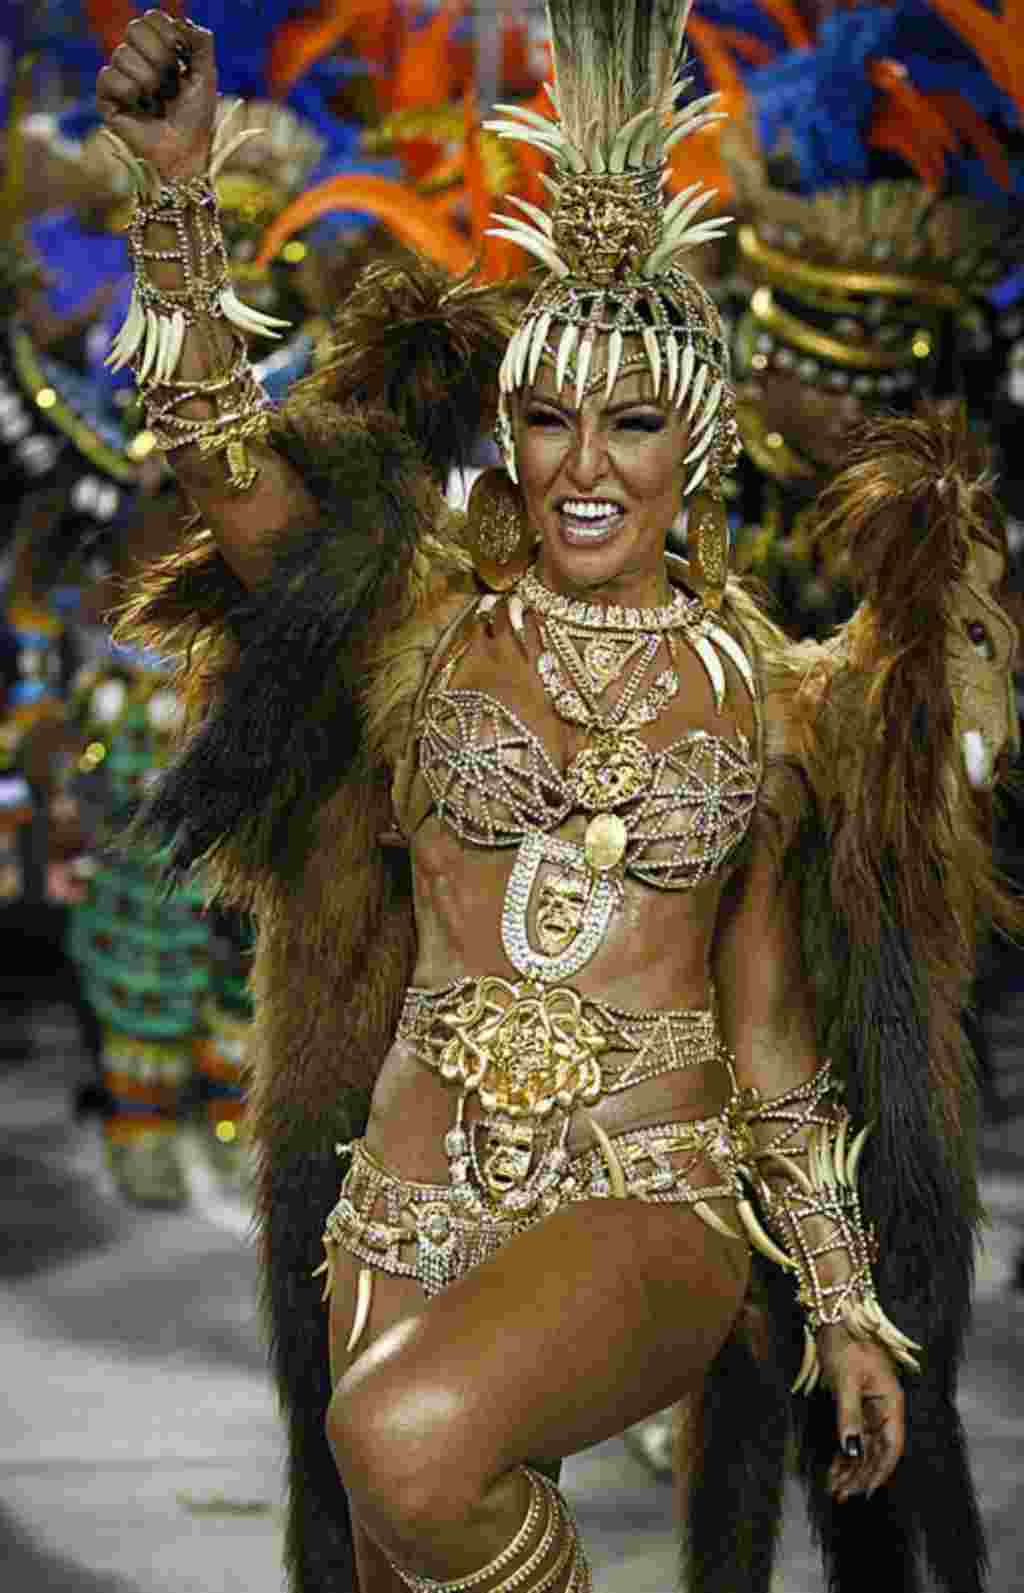 Sabrina Sato, Queen of Vila Isabel samba school, participates in the parade at the Sambadrome during carnival celebrations in Rio de Janeiro, Brazil, February 20, 2012. (AP Photo)